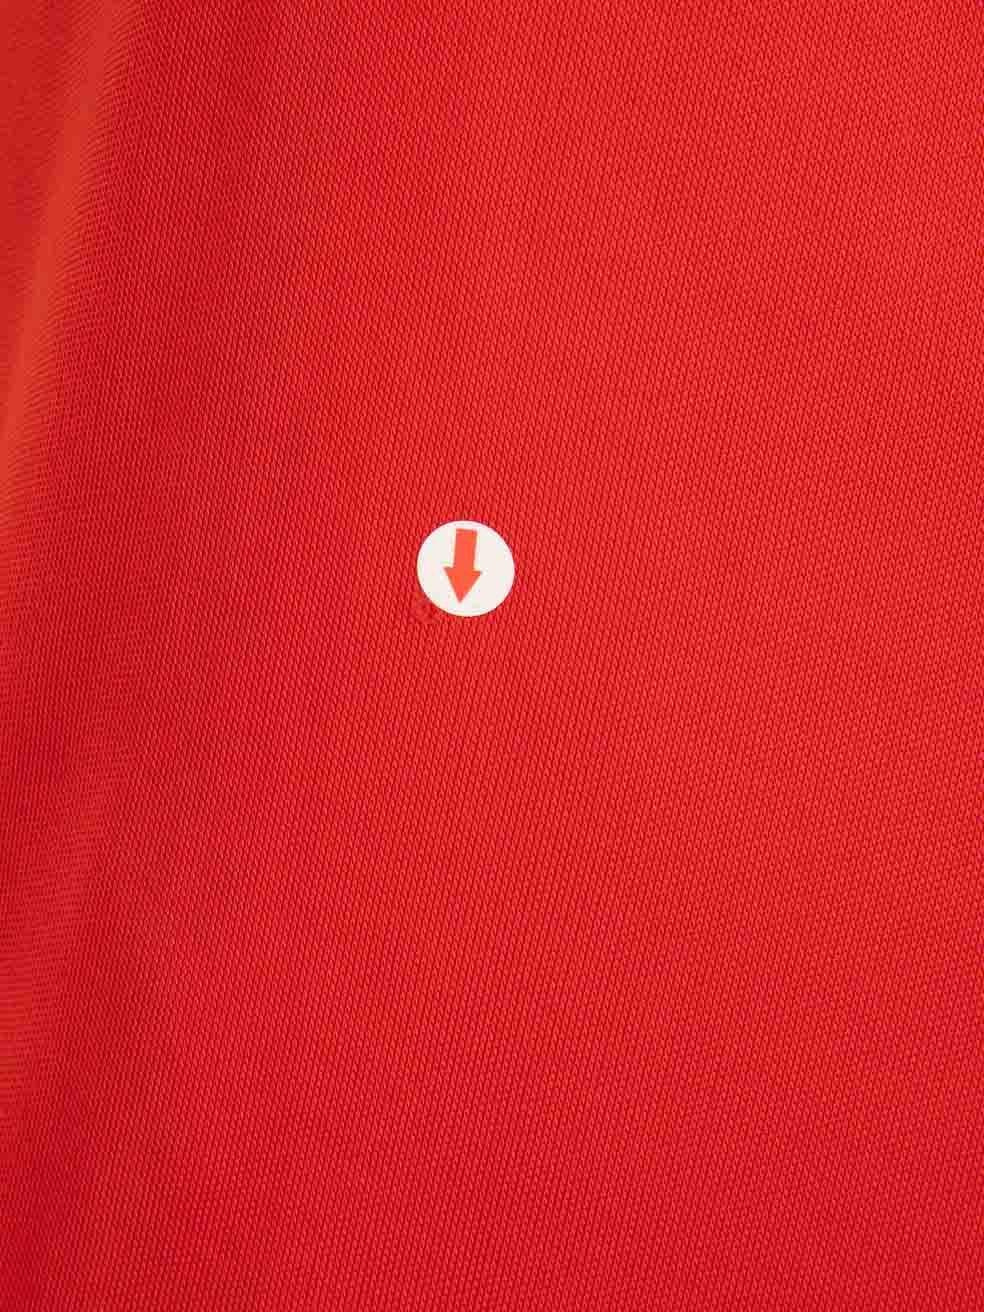 Roberto Cavalli Red One-Shoulder Drape Mini Dress Size L For Sale 1